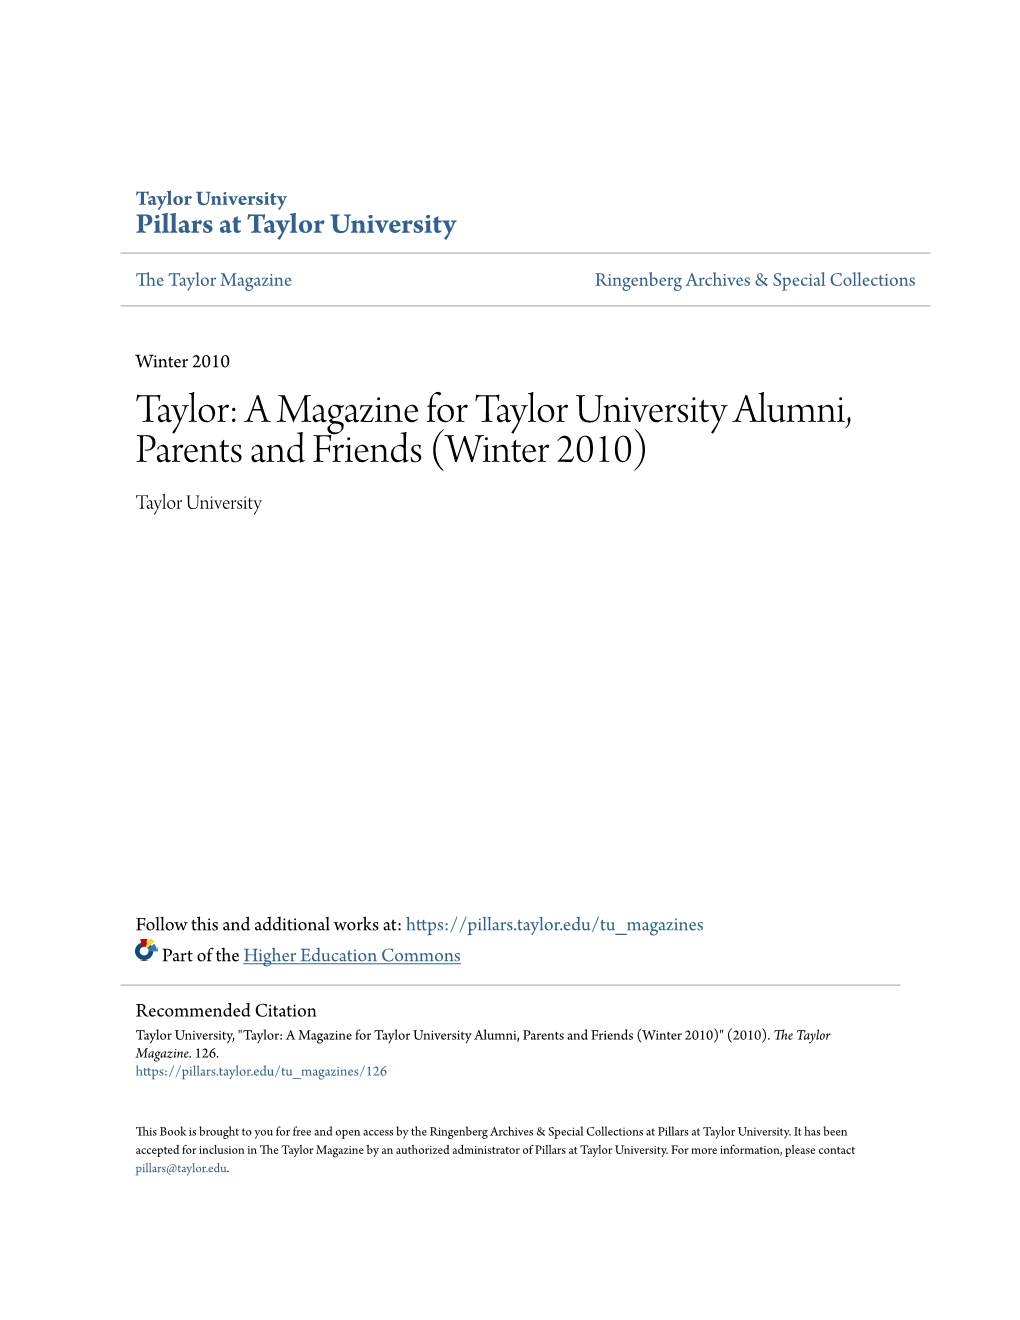 Taylor: a Magazine for Taylor University Alumni, Parents and Friends (Winter 2010) Taylor University